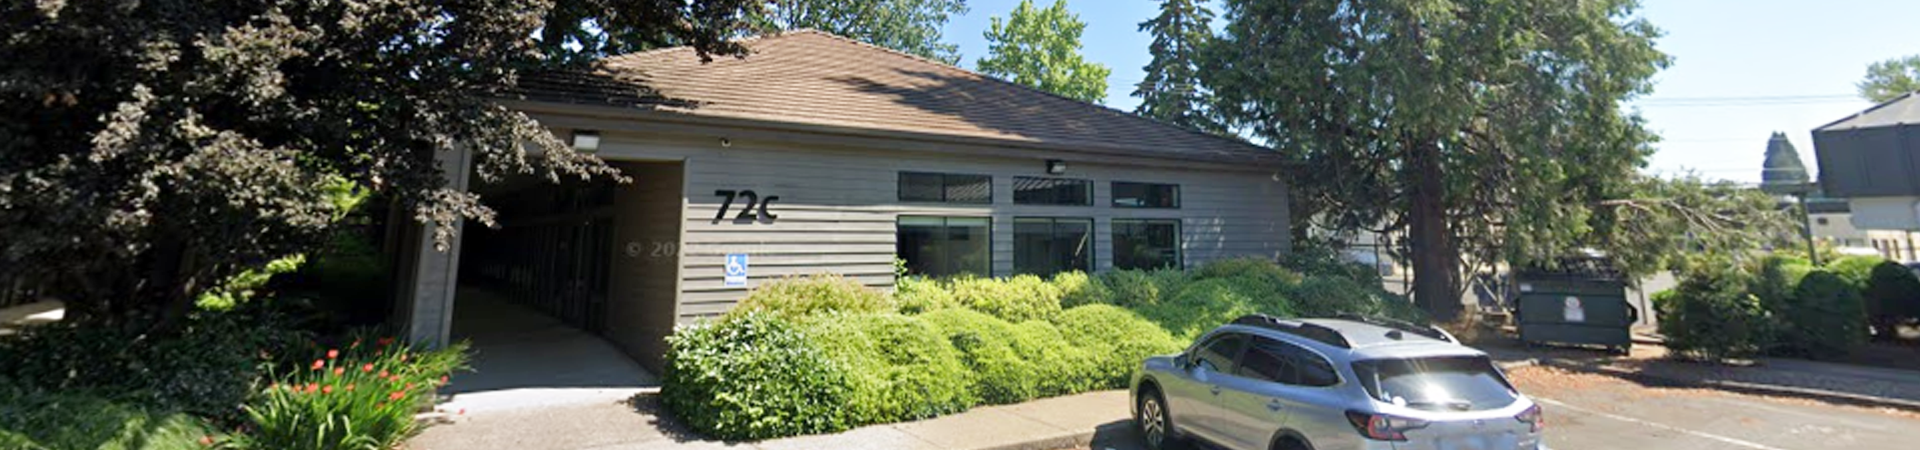  The Eugene Service Center 